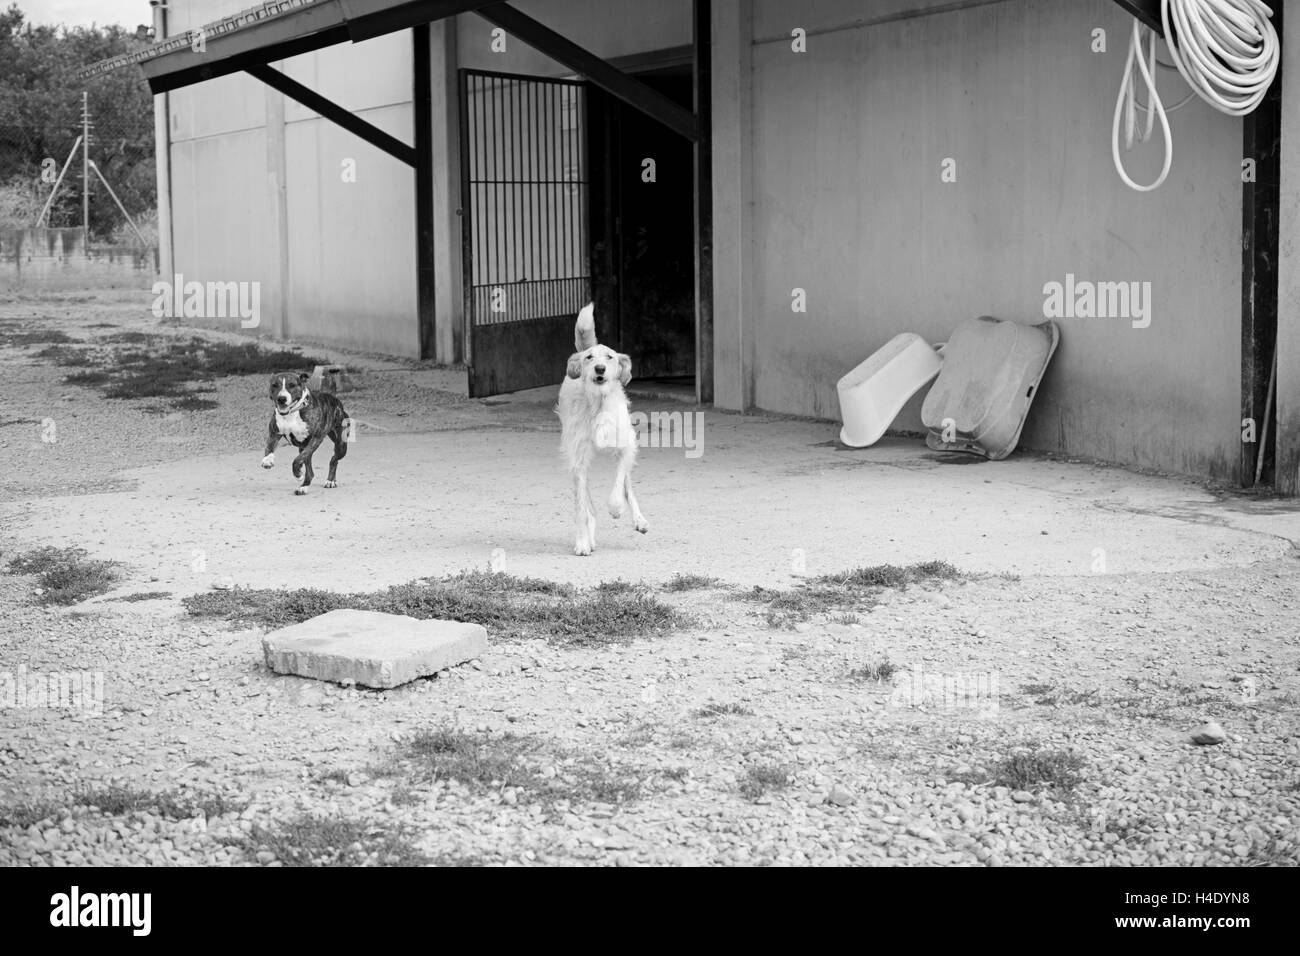 Dog running enclosure, animals and nature Stock Photo